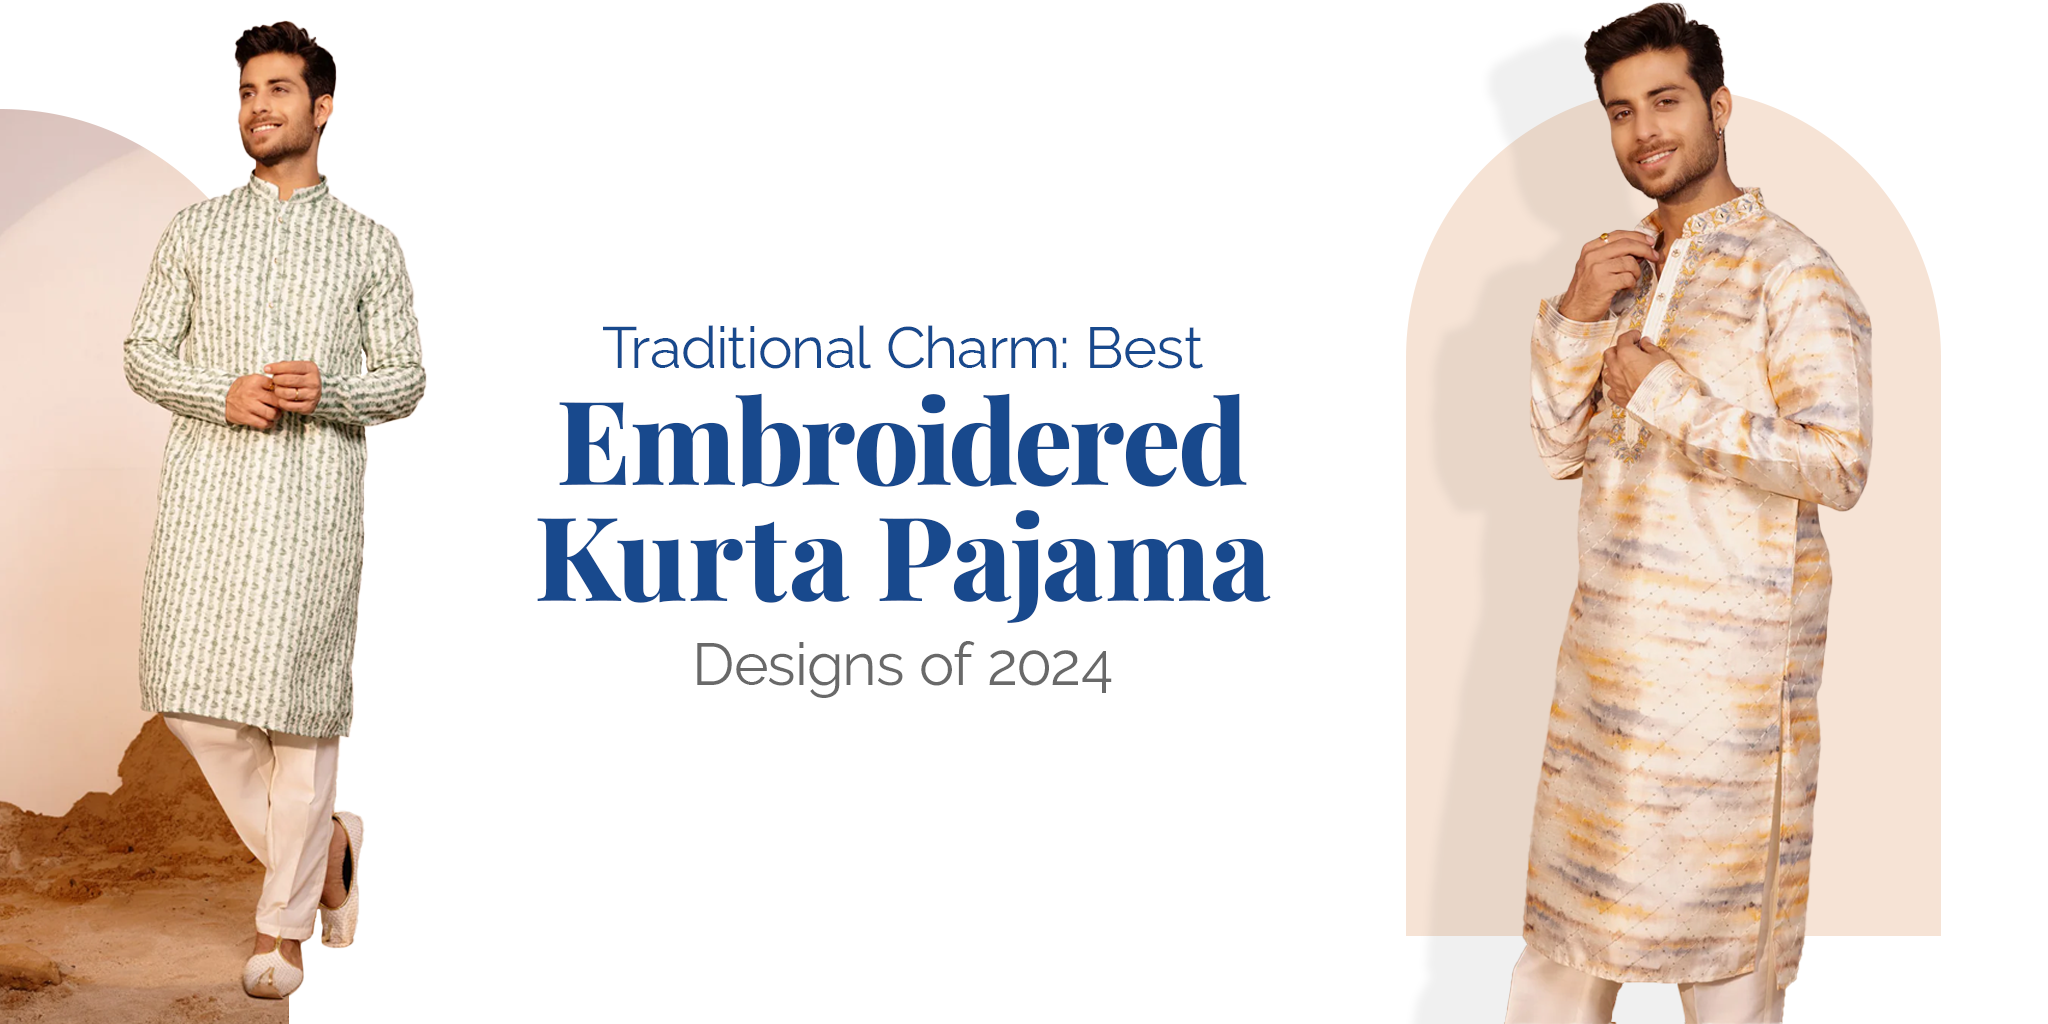 Traditional Charm Best Embroidered Kurta Pajama Designs of 2024